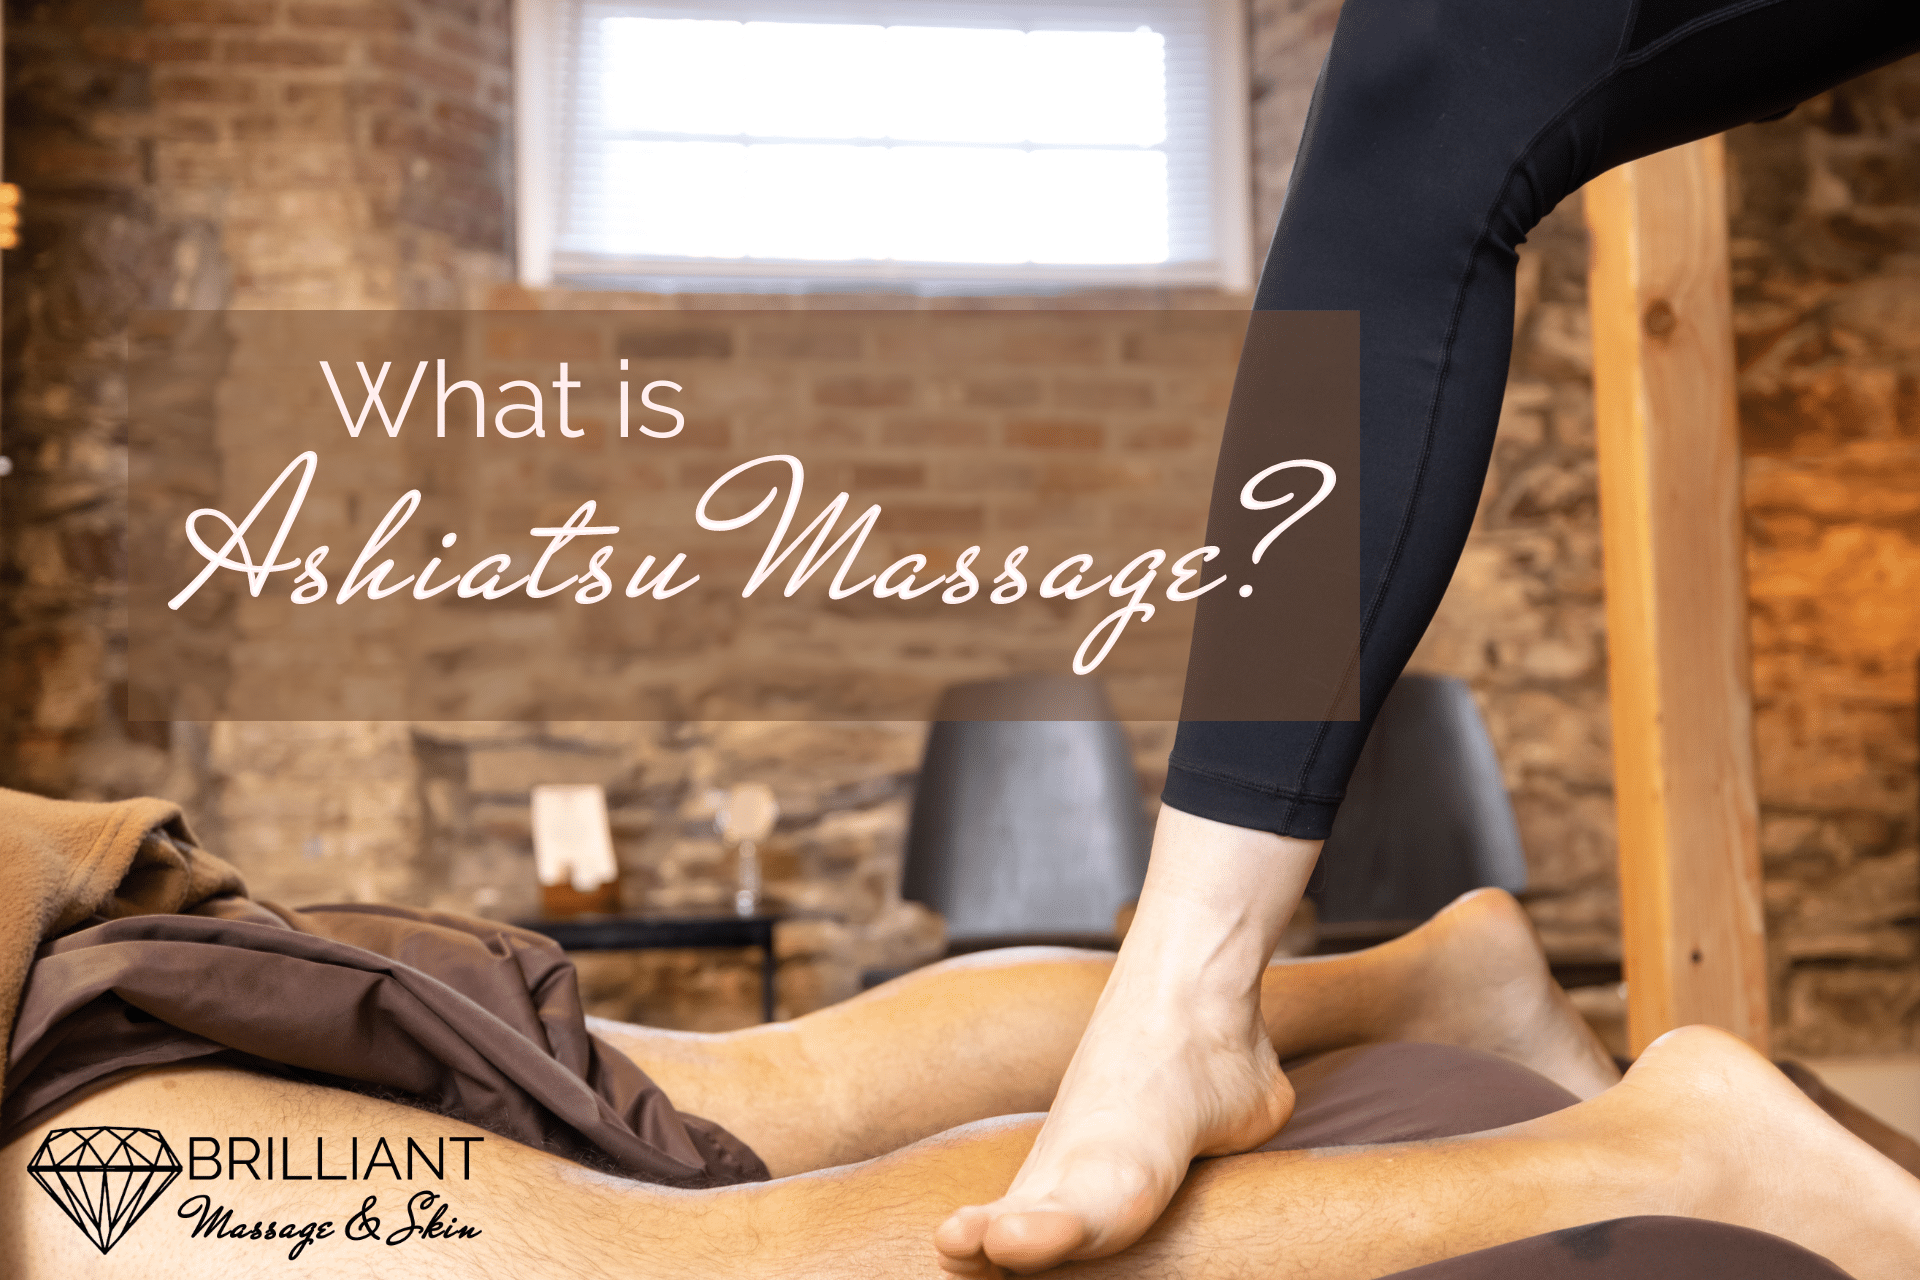 https://jolitabrilliant.com/wp-content/uploads/2020/11/Ashiatsu-massage.png